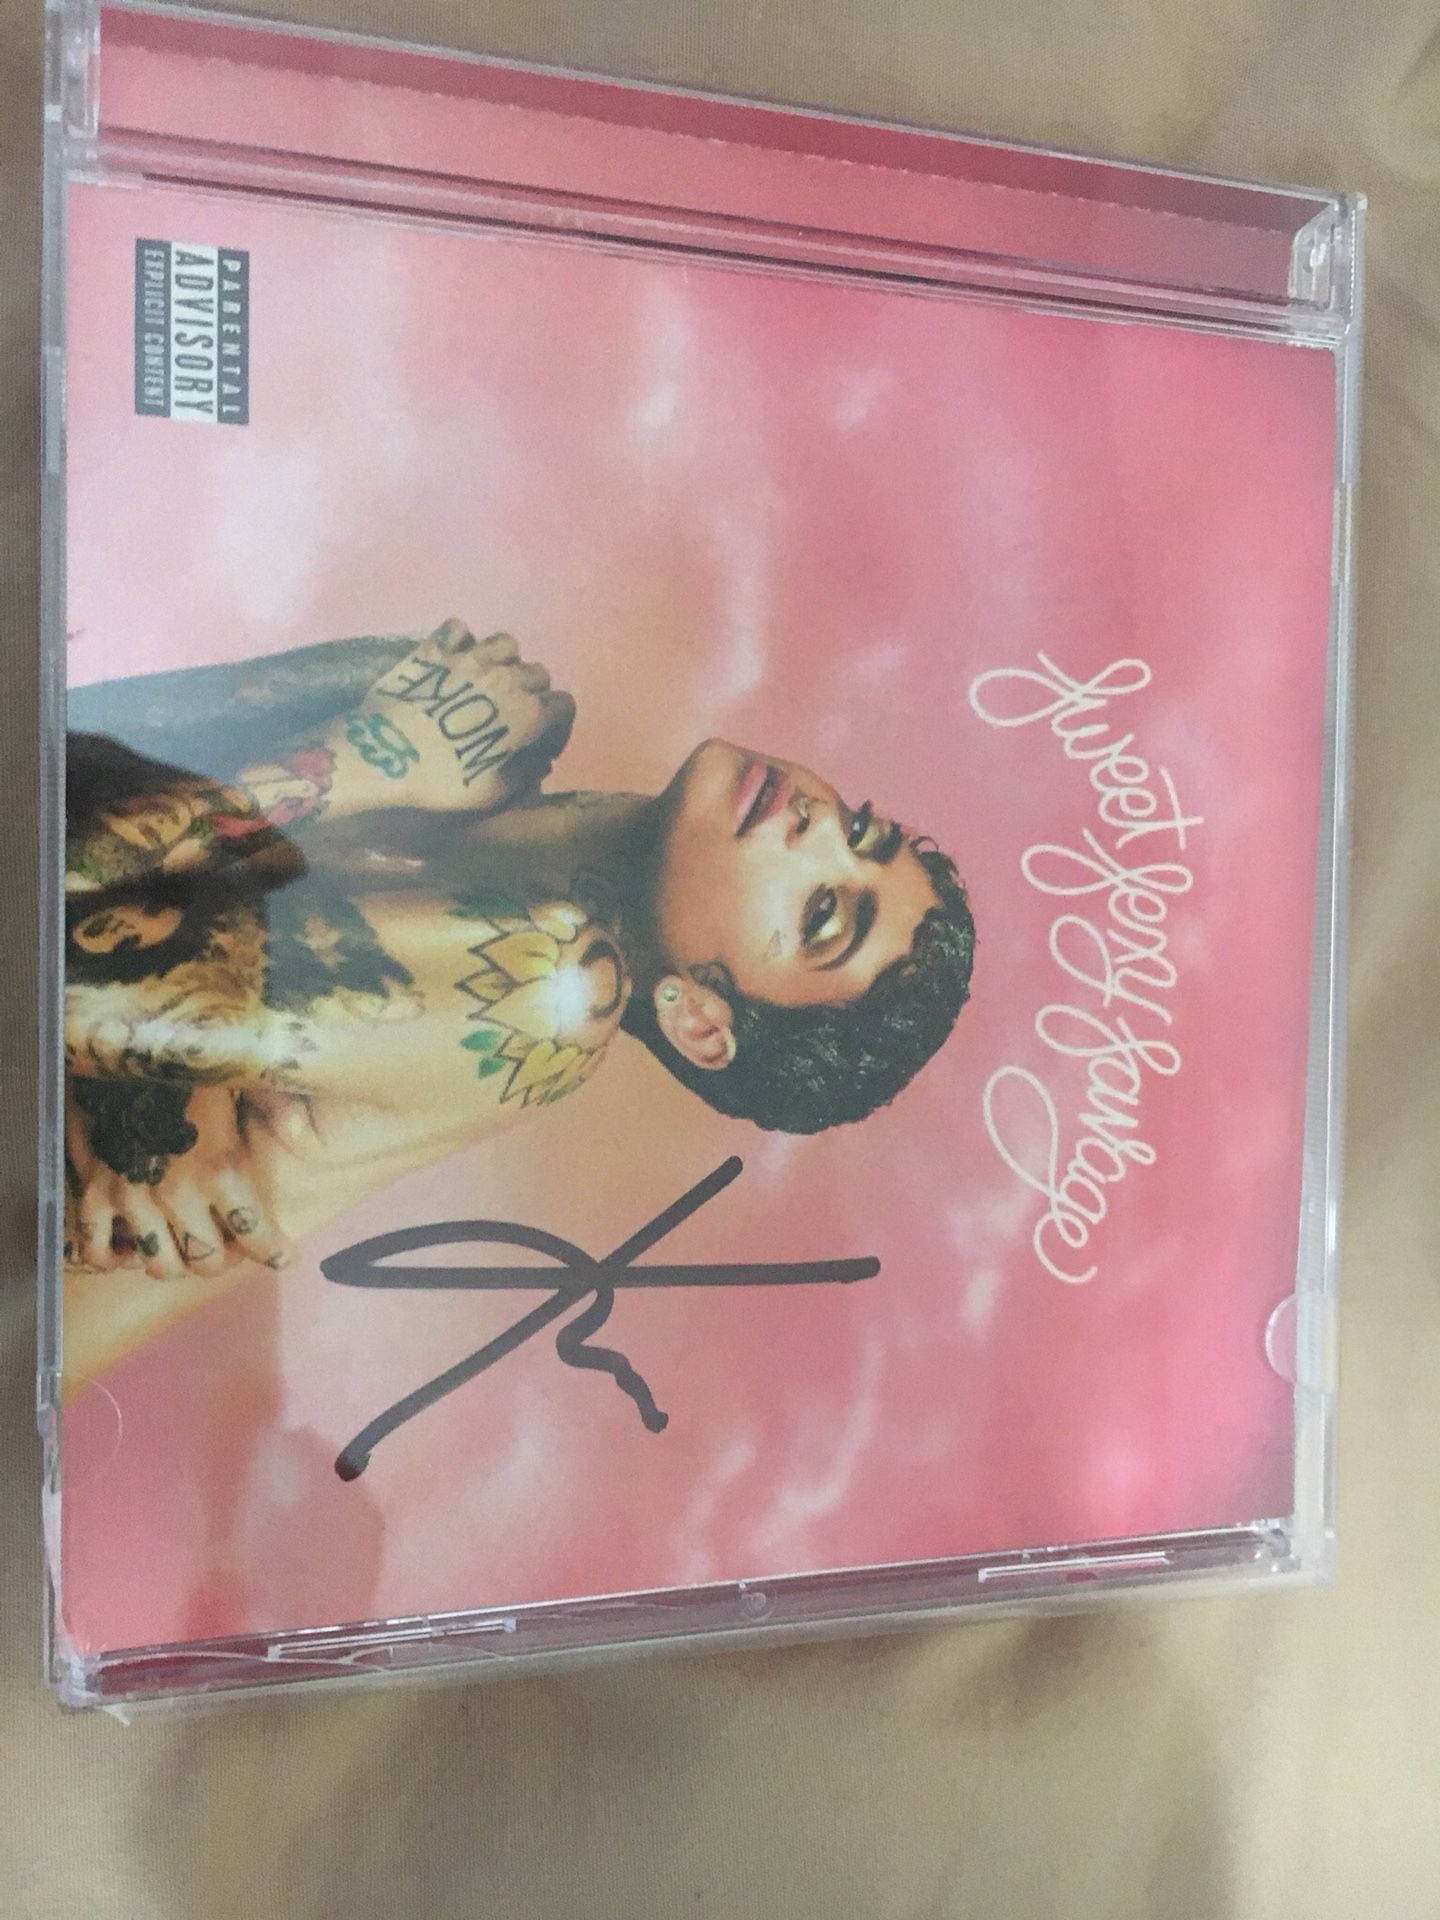 Signed Kehlani CD